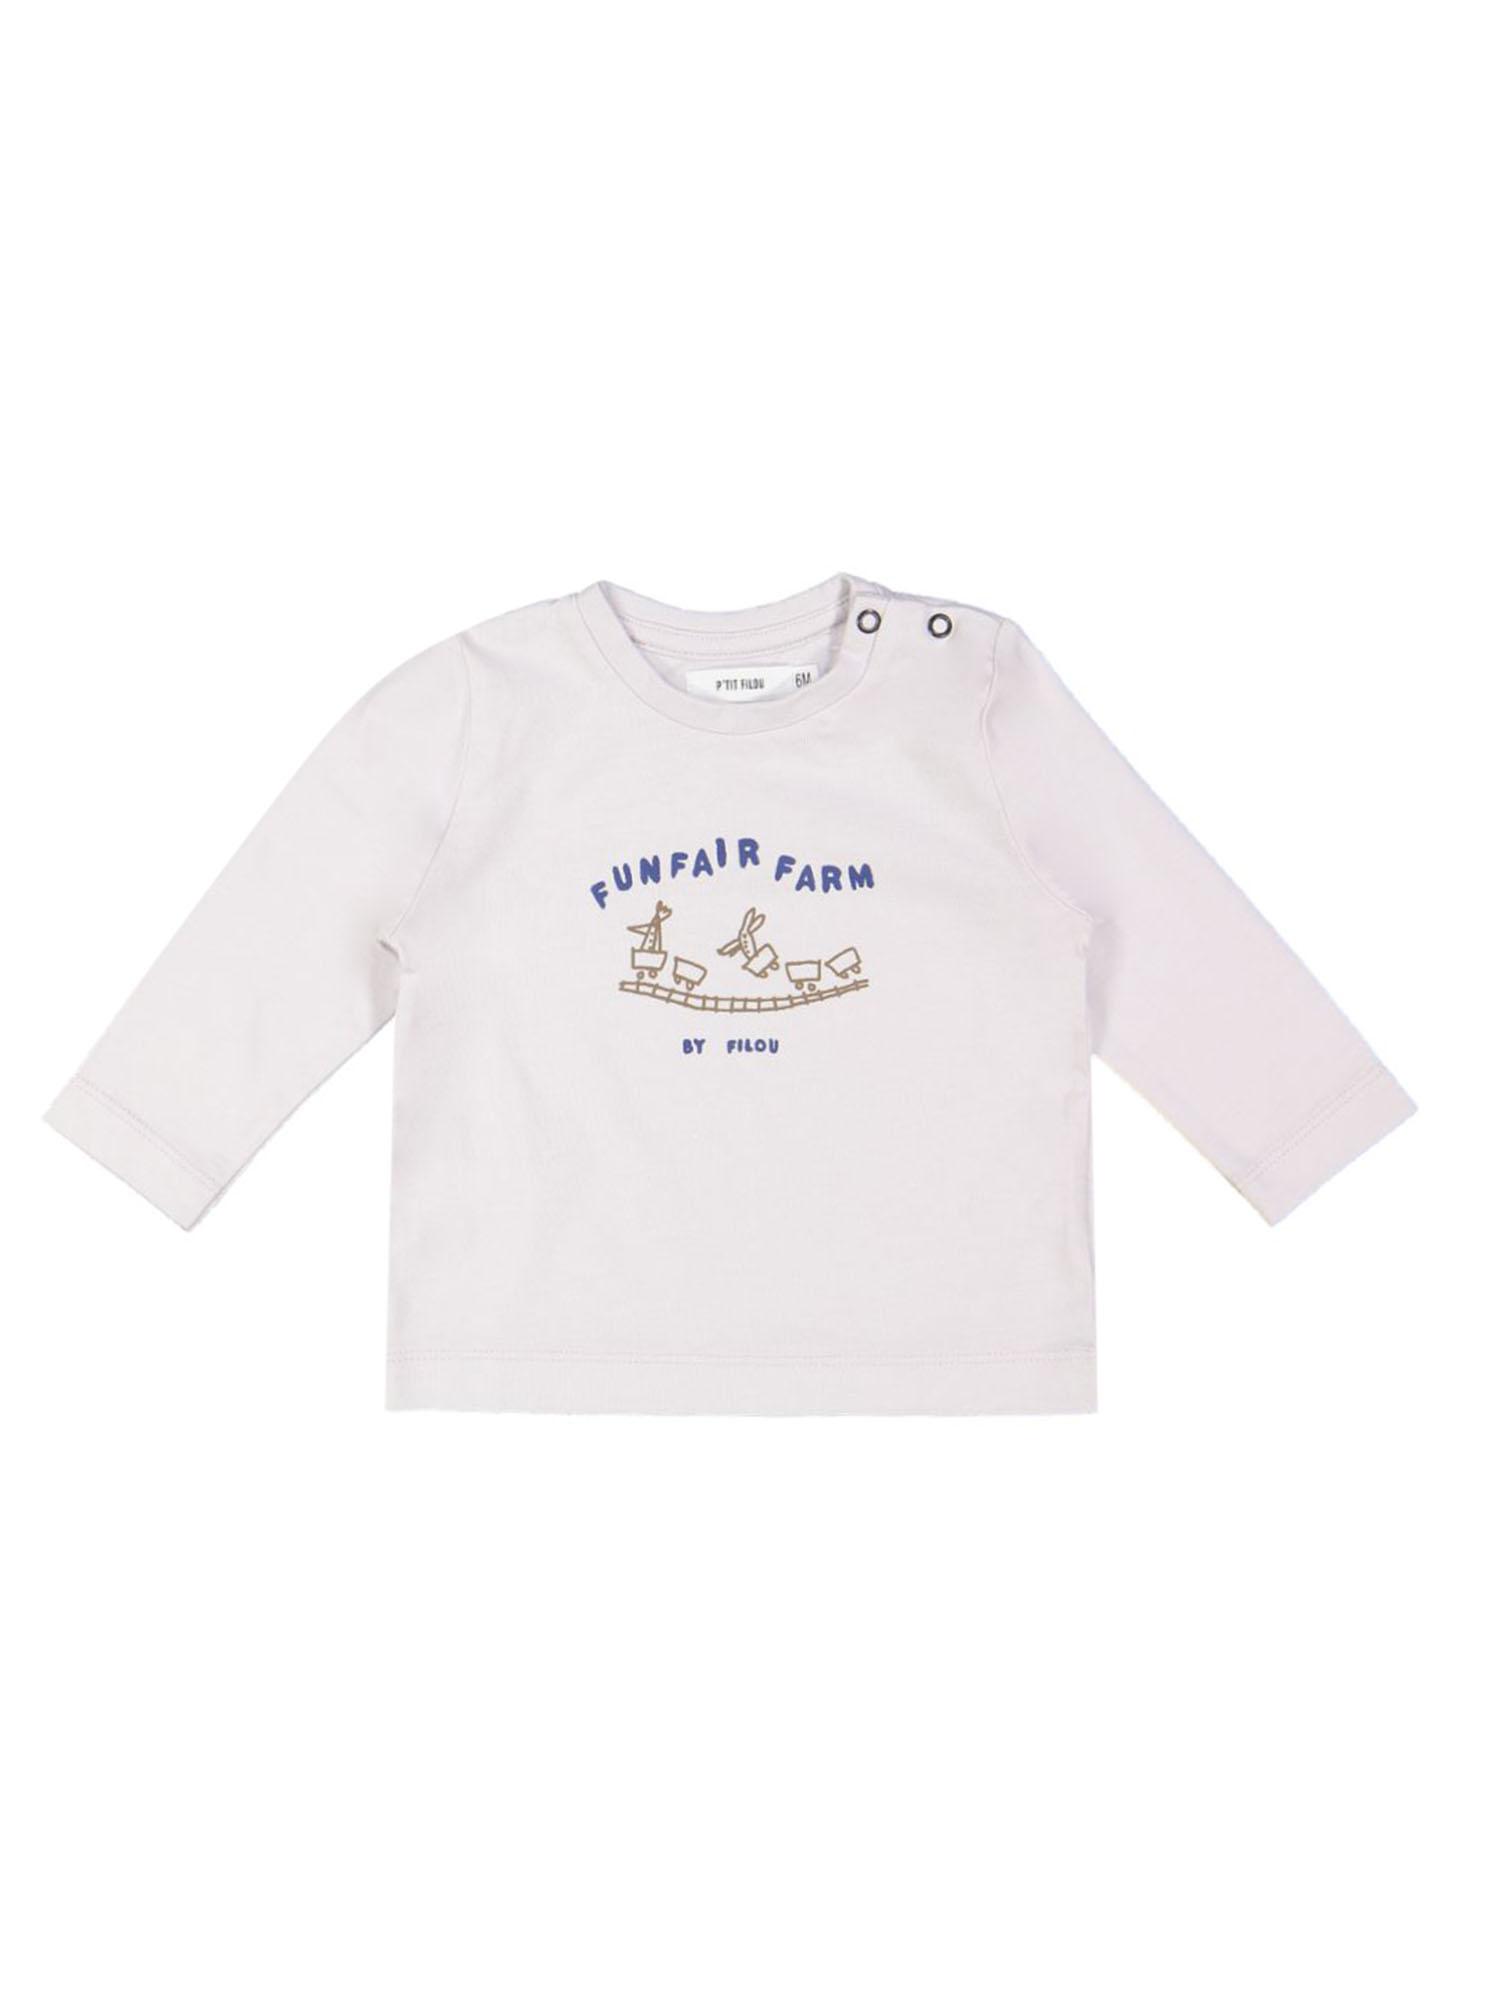 T-shirt mini fête foraine lilas